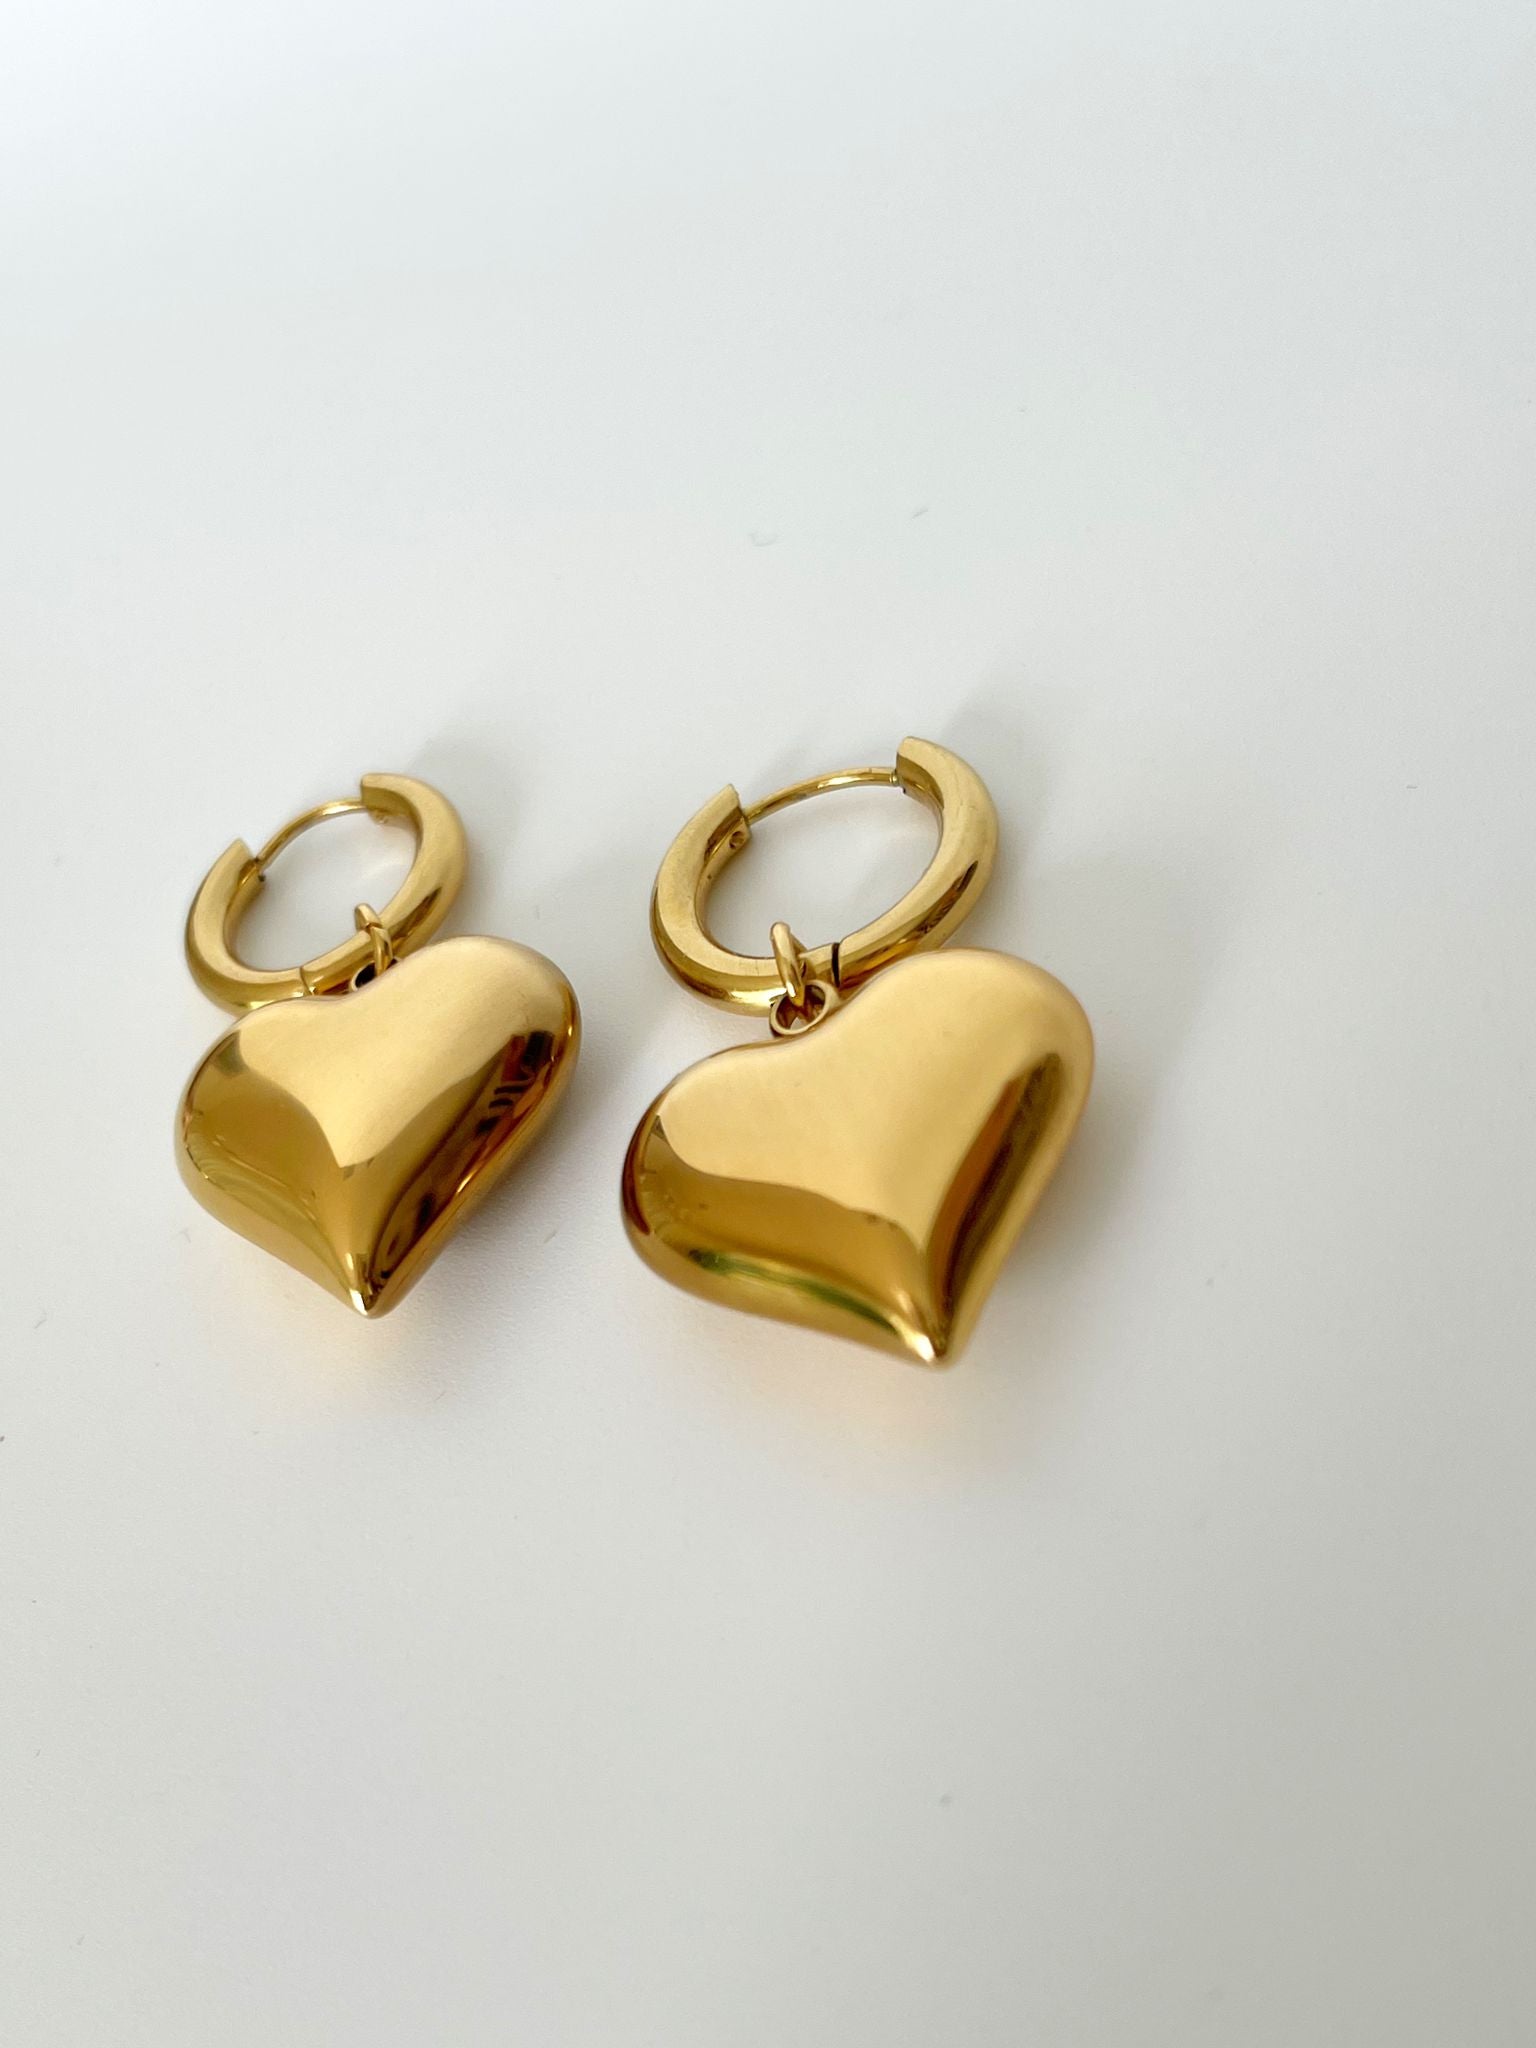 Queen of hearts GOLD earrings